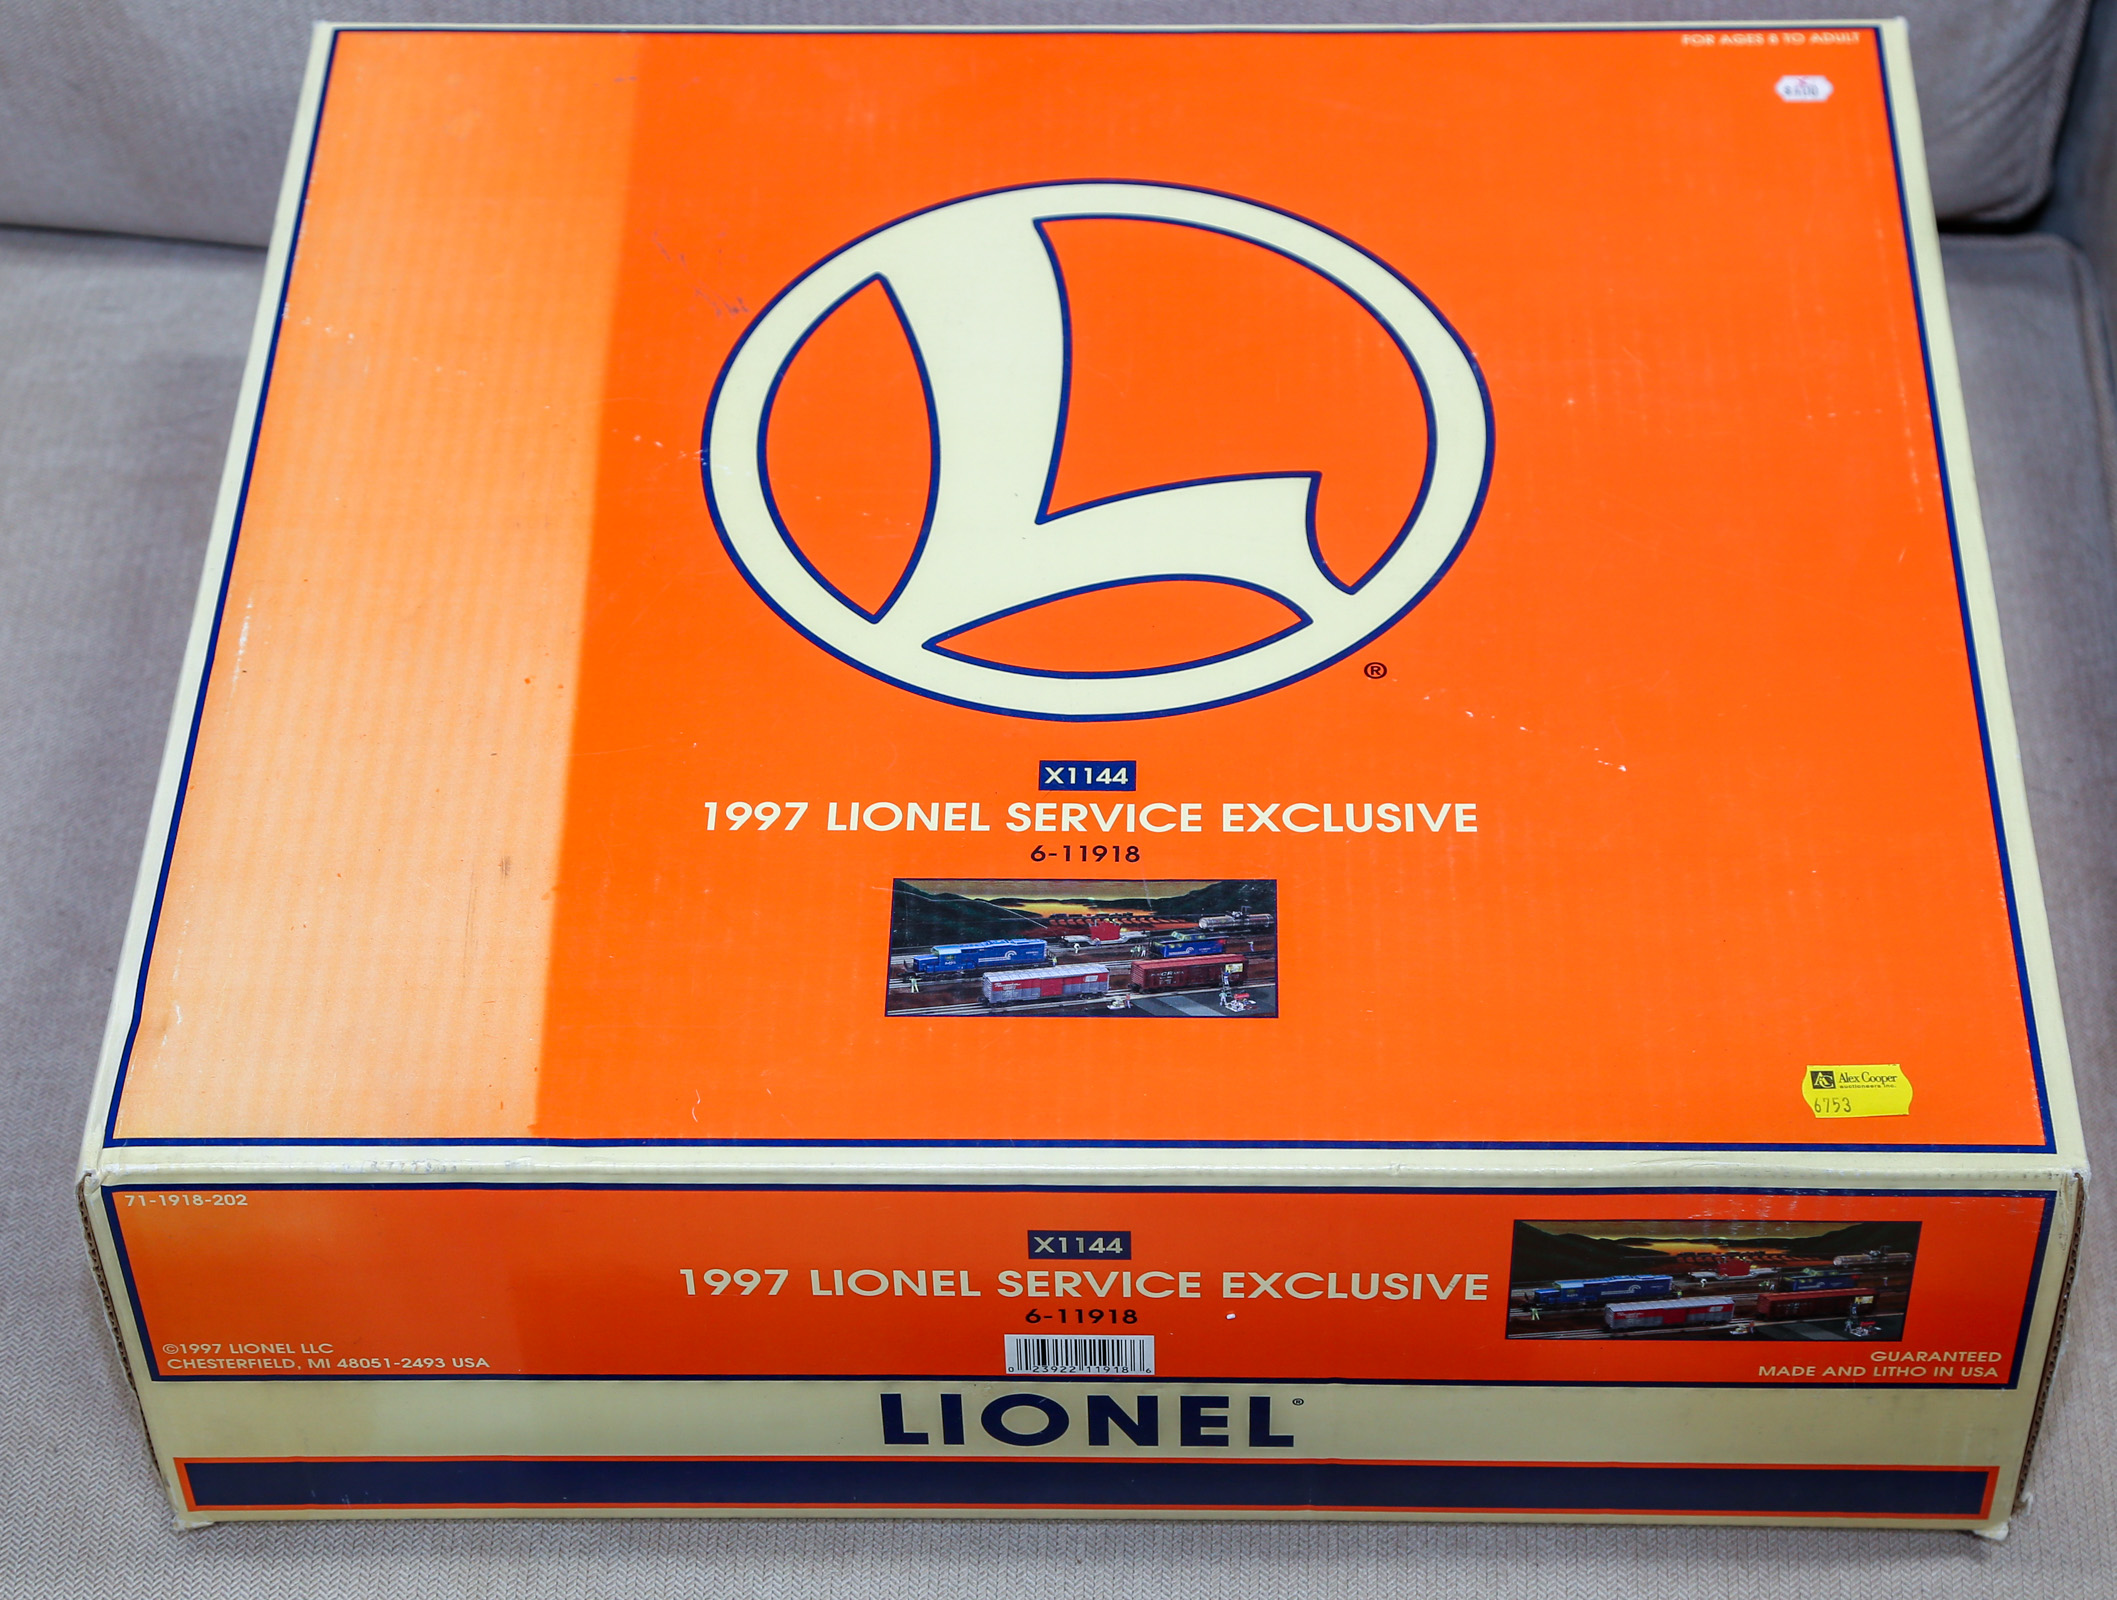 LIONEL 1977 SERVICE EXCLUSIVE BOXED 3c78fe